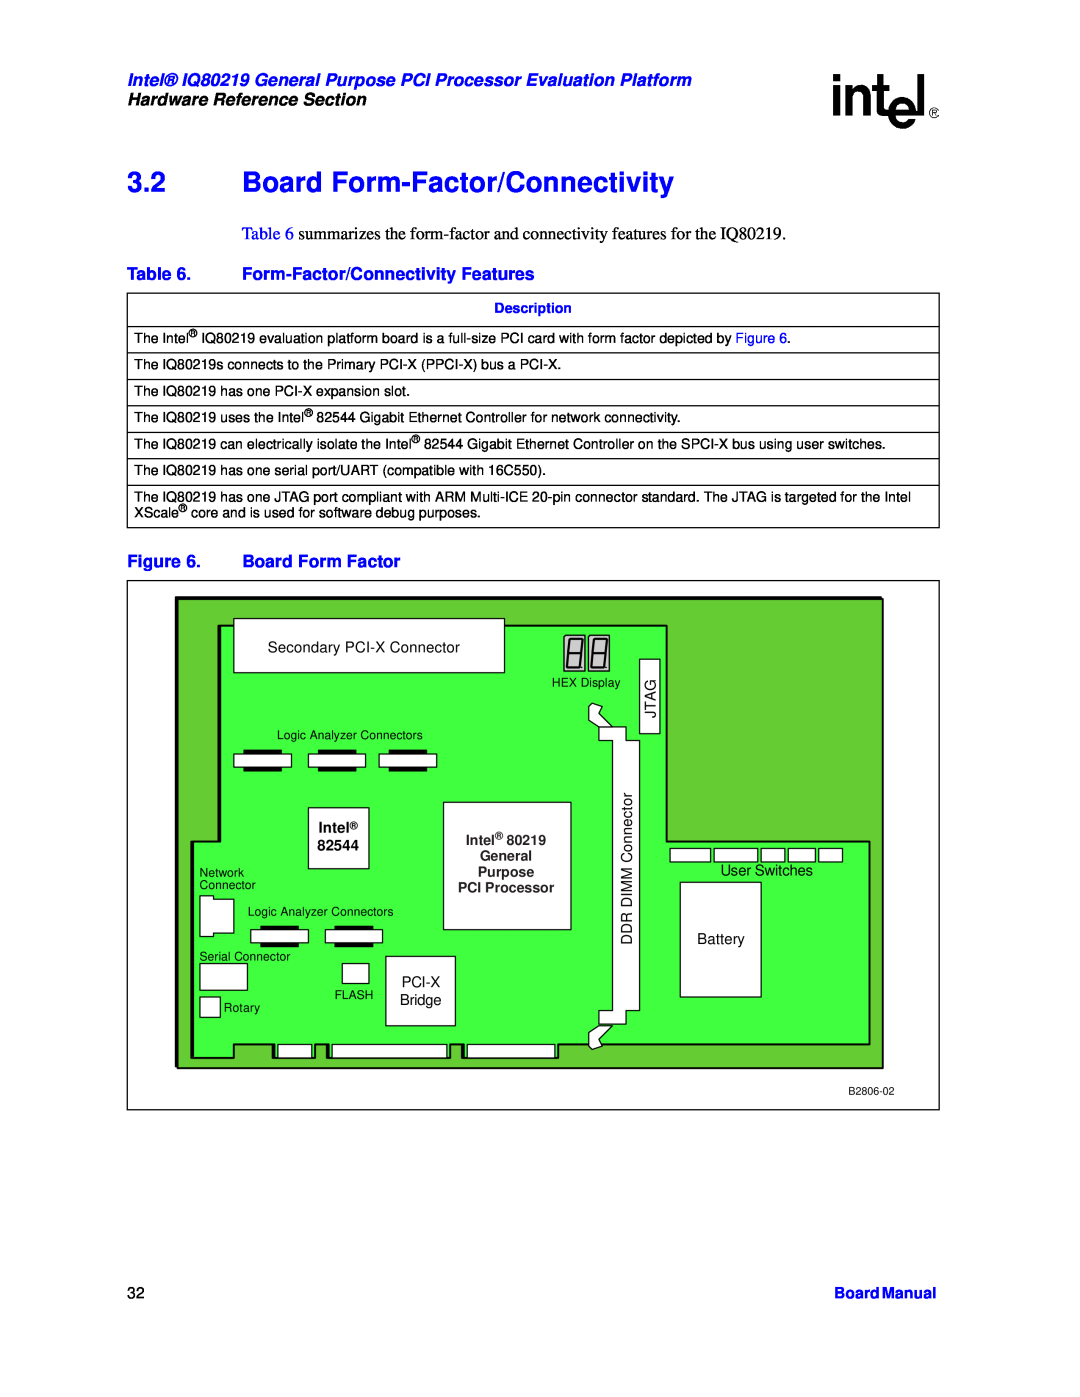 Intel IQ80219 Board Form-Factor/Connectivity, Hardware Reference Section, Form-Factor/Connectivity Features, Board Manual 